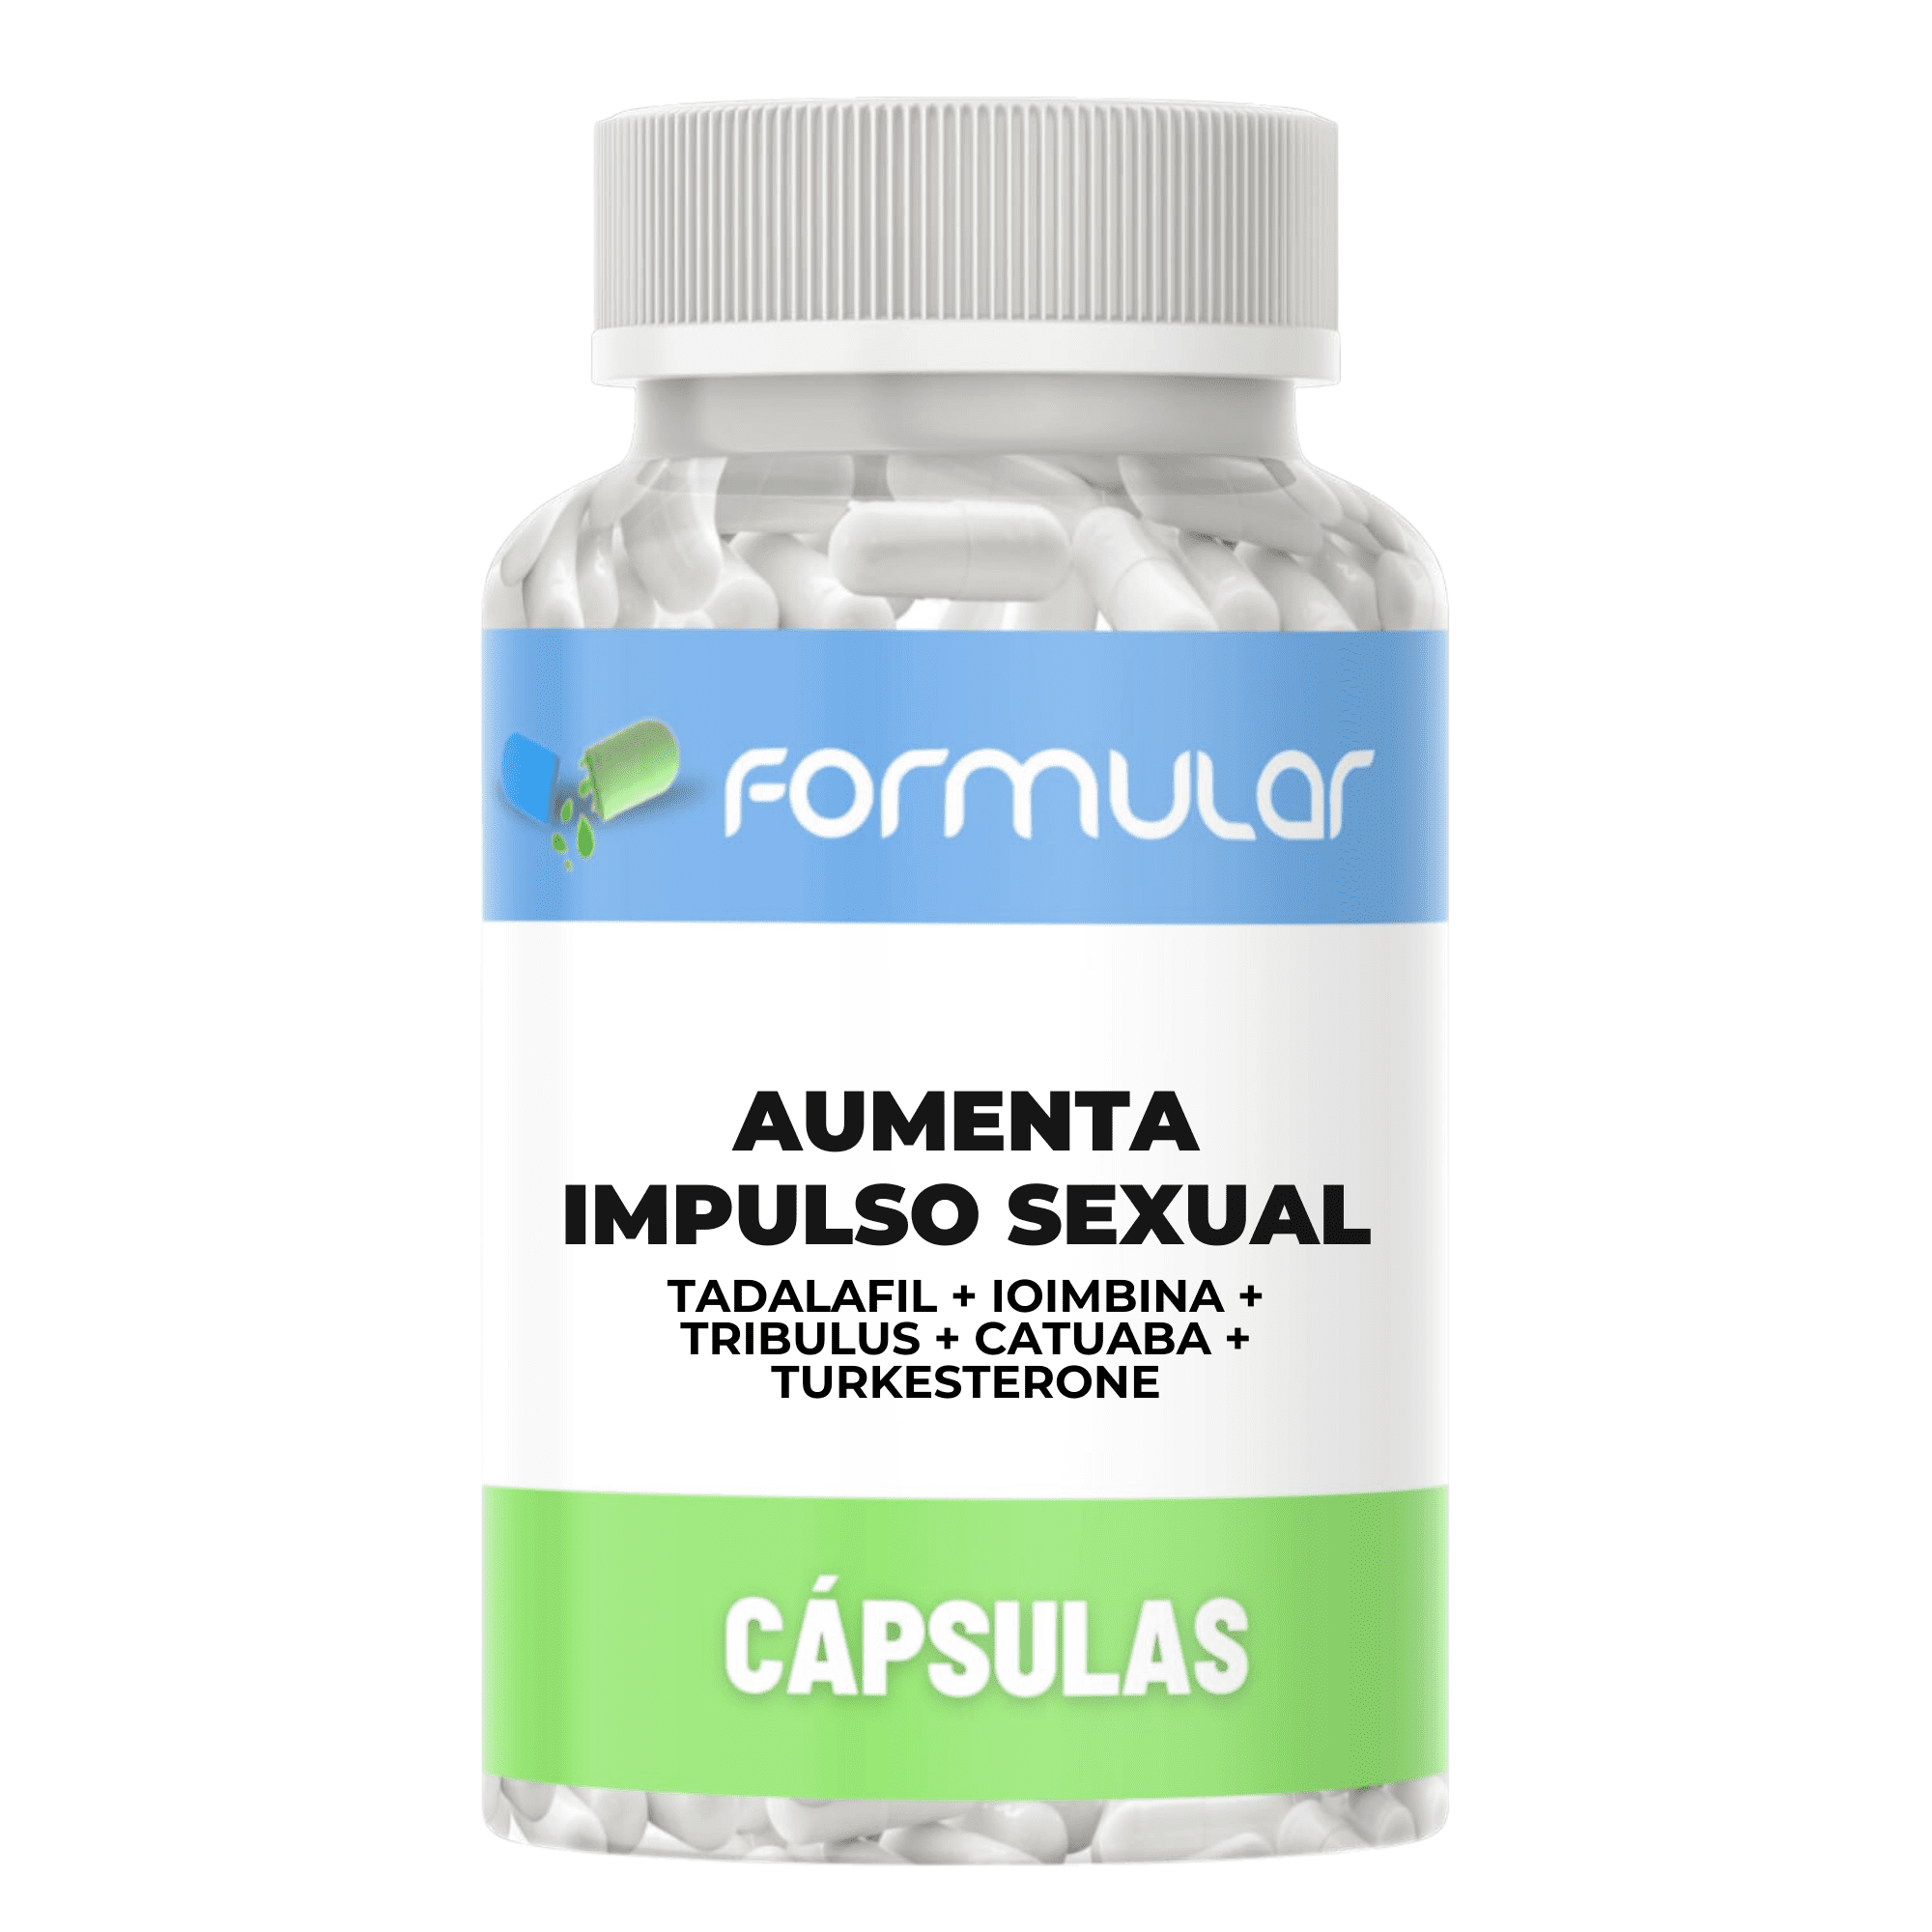 Tadalafil + Ioimbina + Tribulus + Catuaba + Turkesterone - Aumenta Impulso Sexual